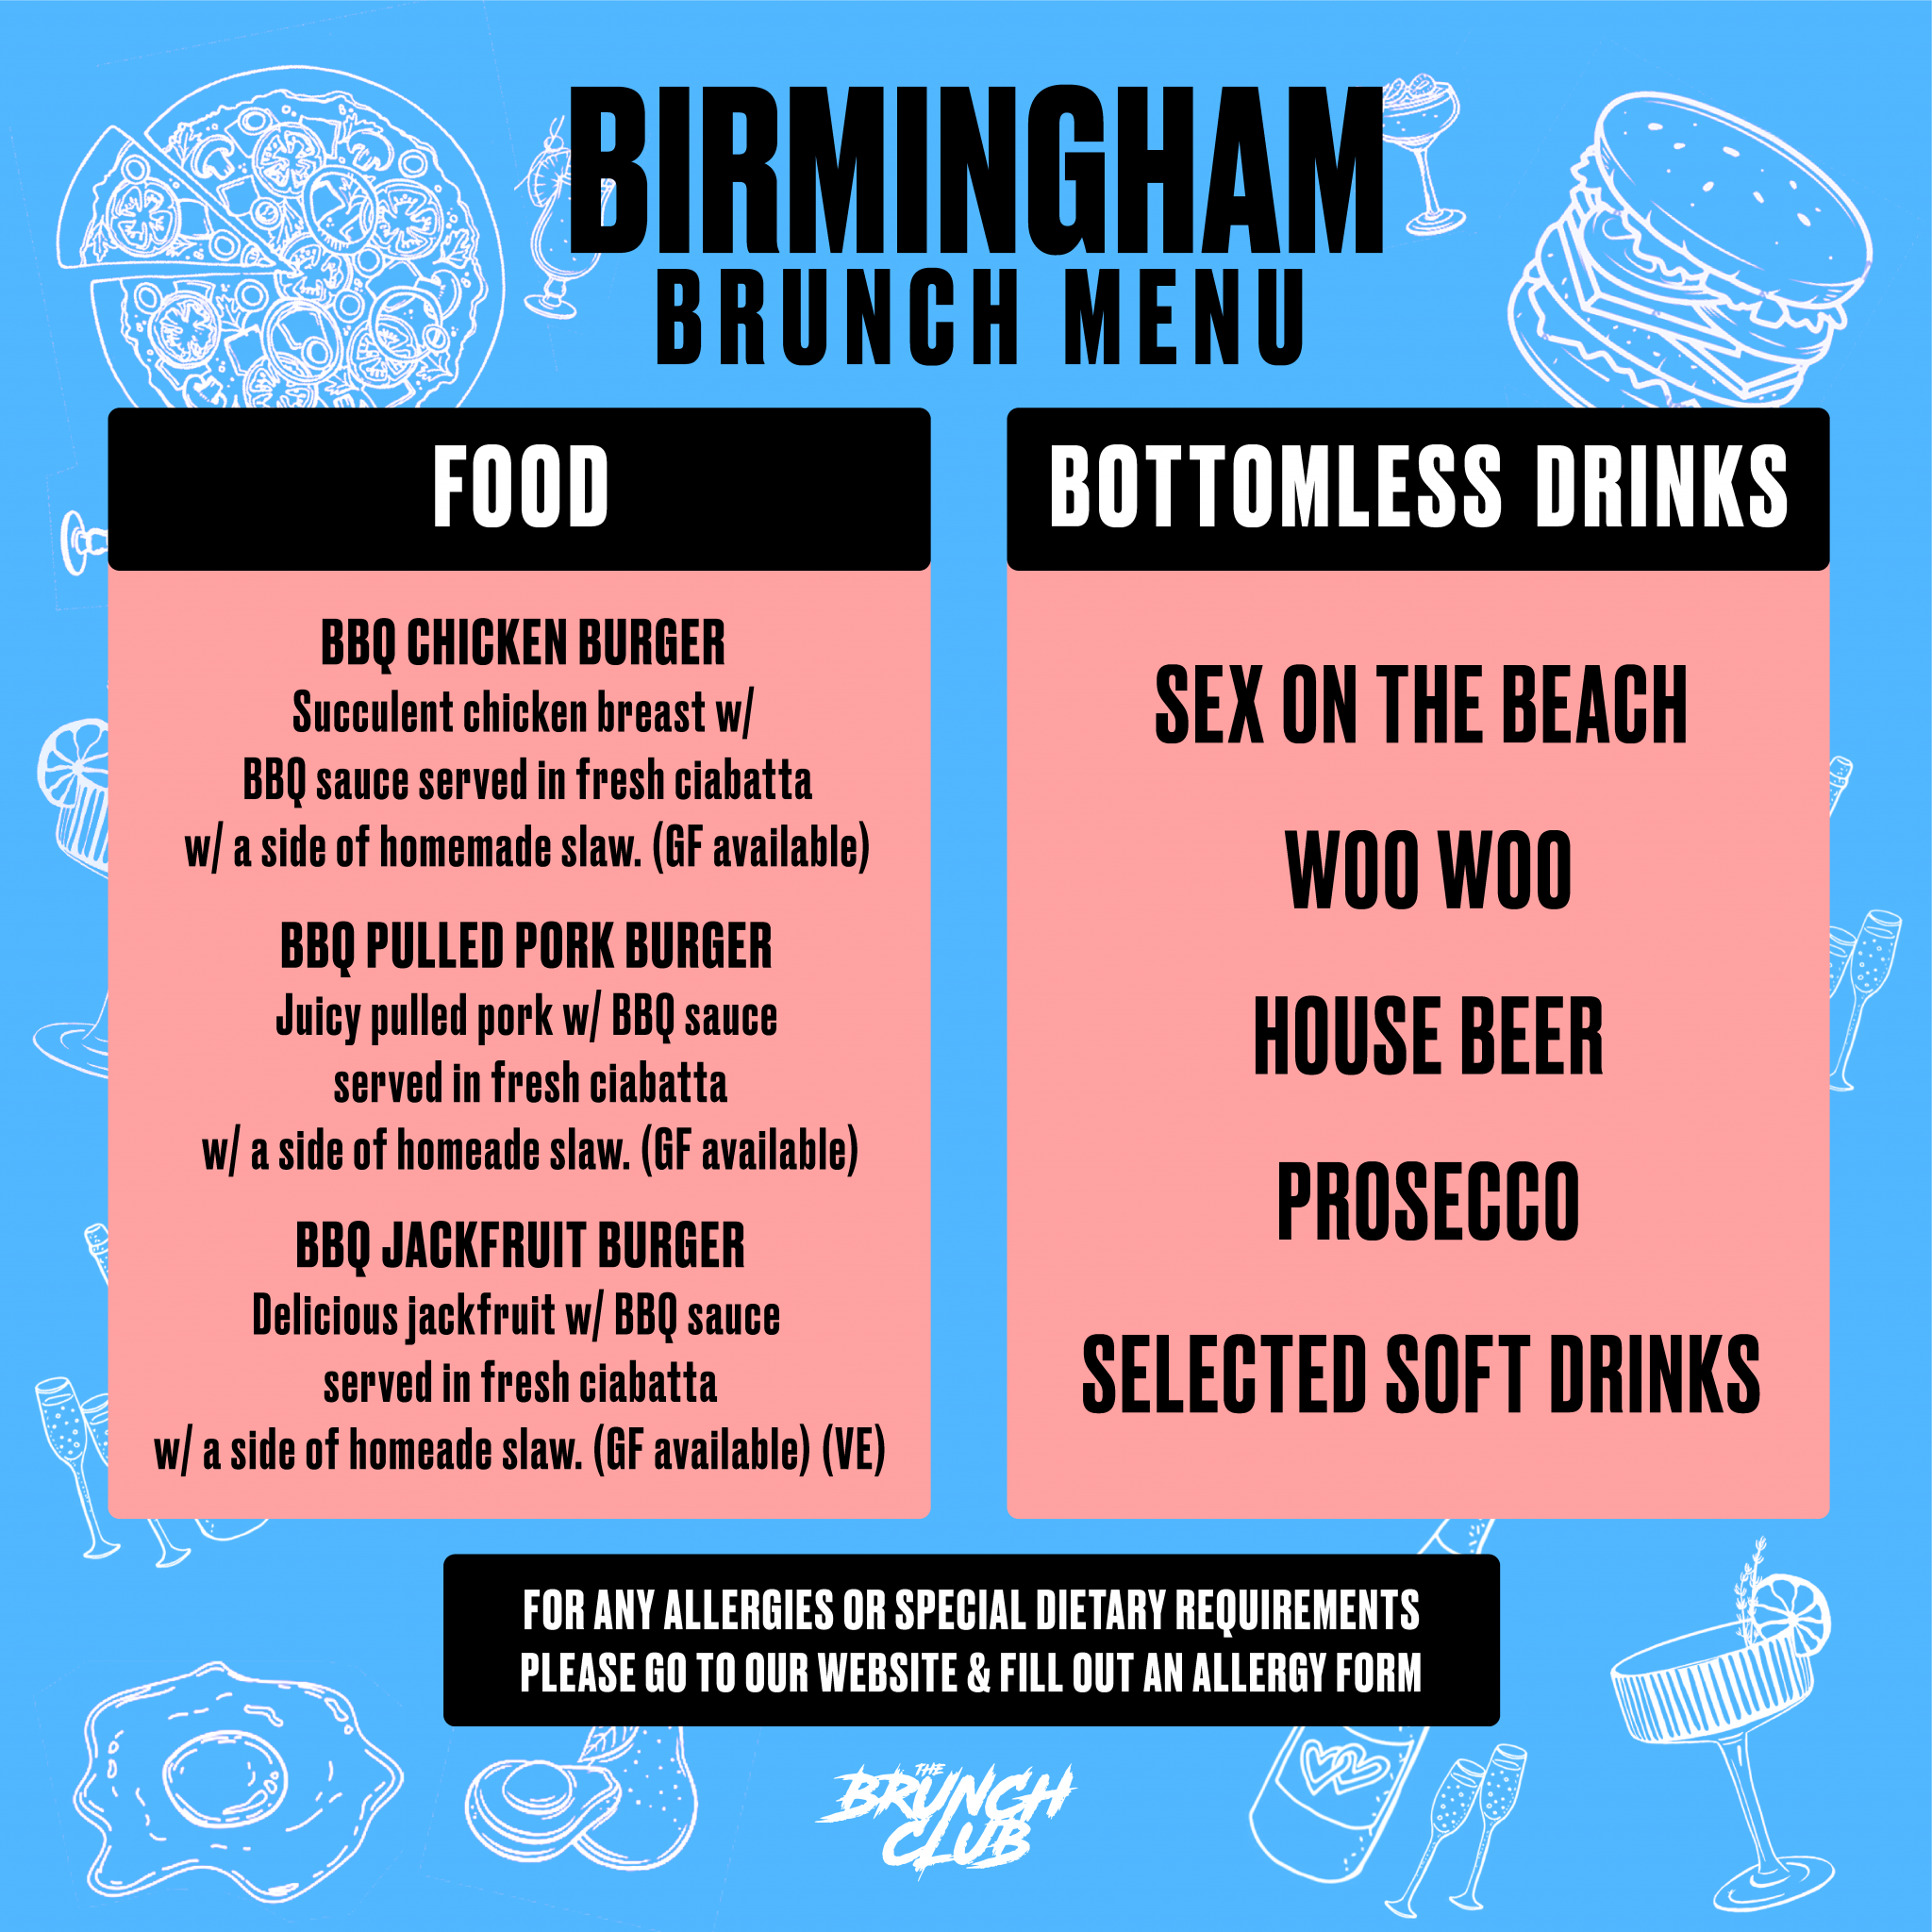 90's Baby Bottomless Brunch - Birmingham